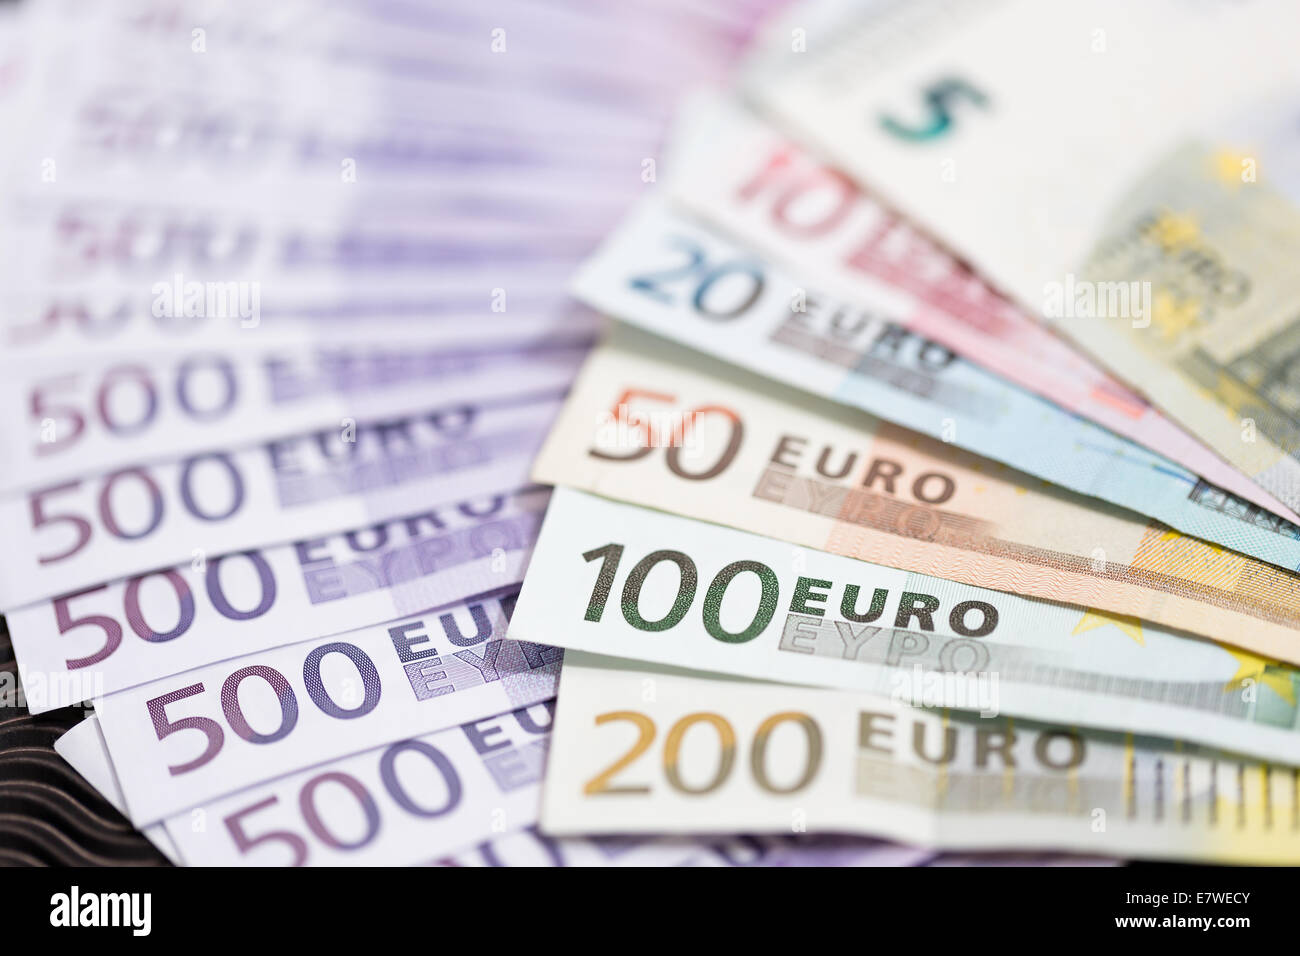 EUR money, banknotes Stock Photo